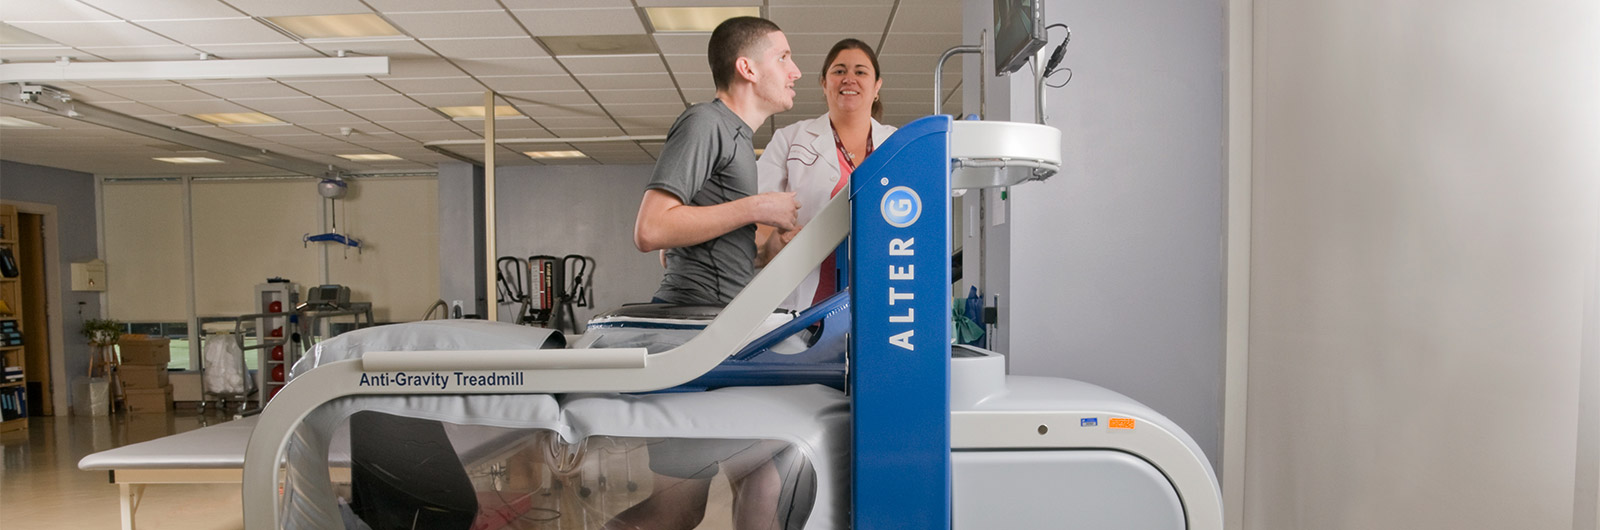 Patient using anti-gravity treadmill